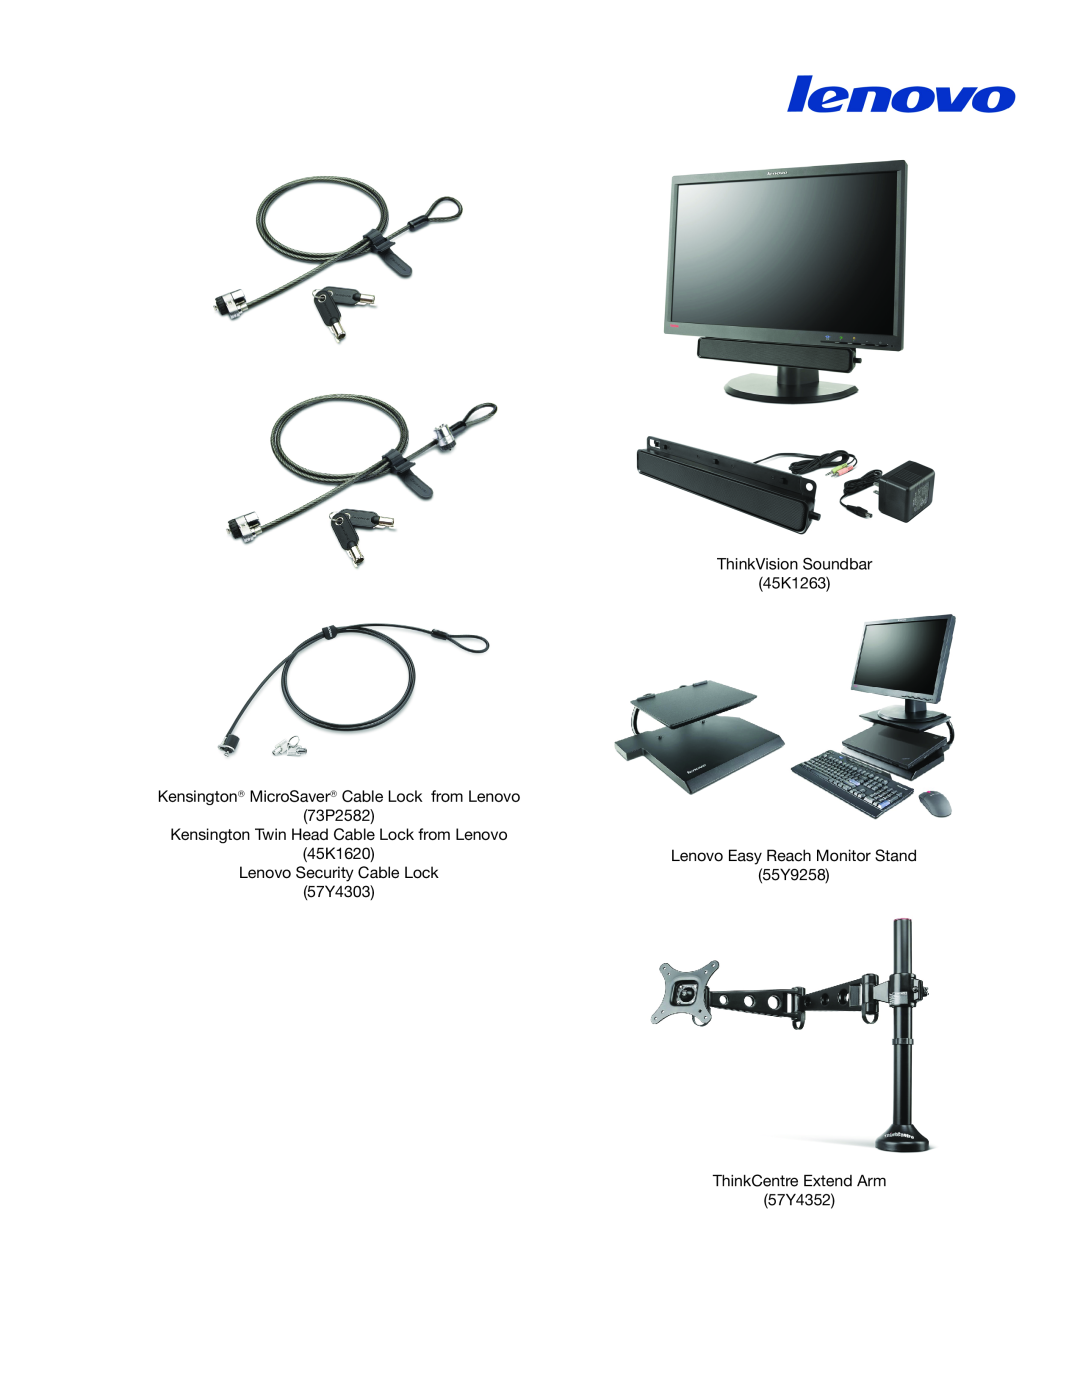 Lenovo L2321x ThinkVision Soundbar 45K1263, Kensington→ MicroSaver→ Cable Lock from Lenovo, ThinkCentre Extend Arm 57Y4352 